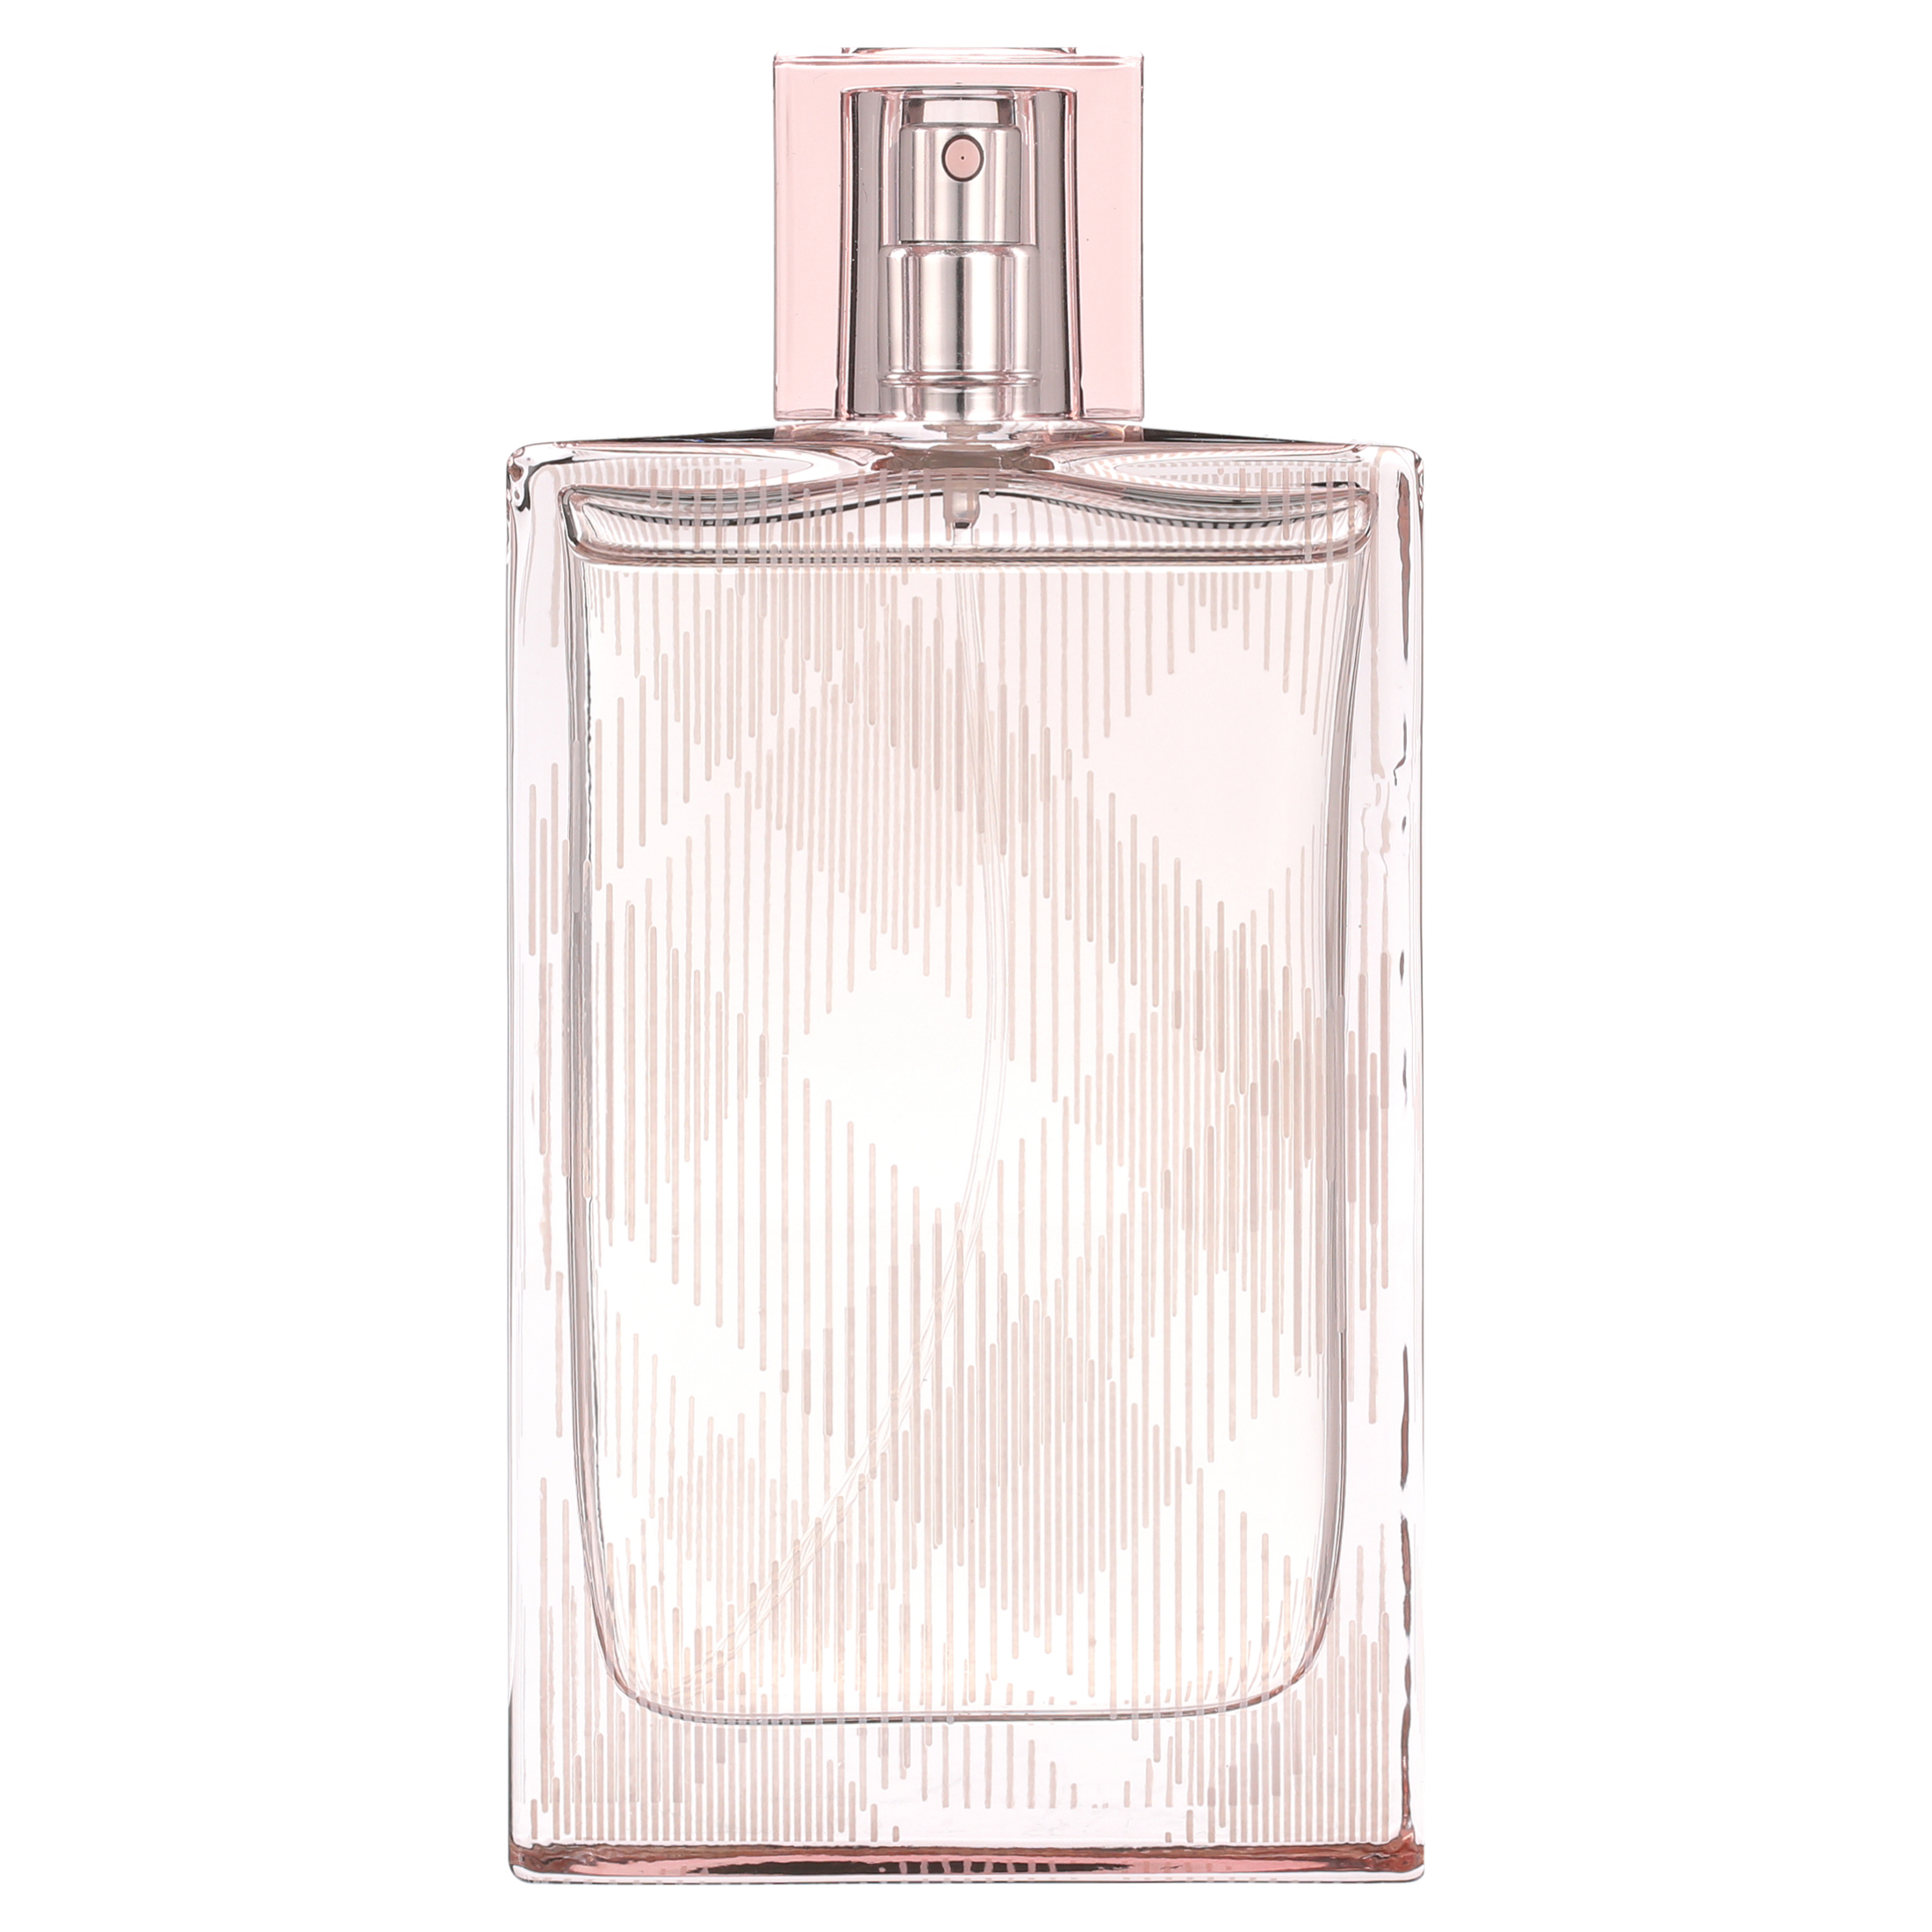 Burberry Brit Sheer Eau De Toilette Spray, Perfume for Women, 3.3 oz - image 1 of 5